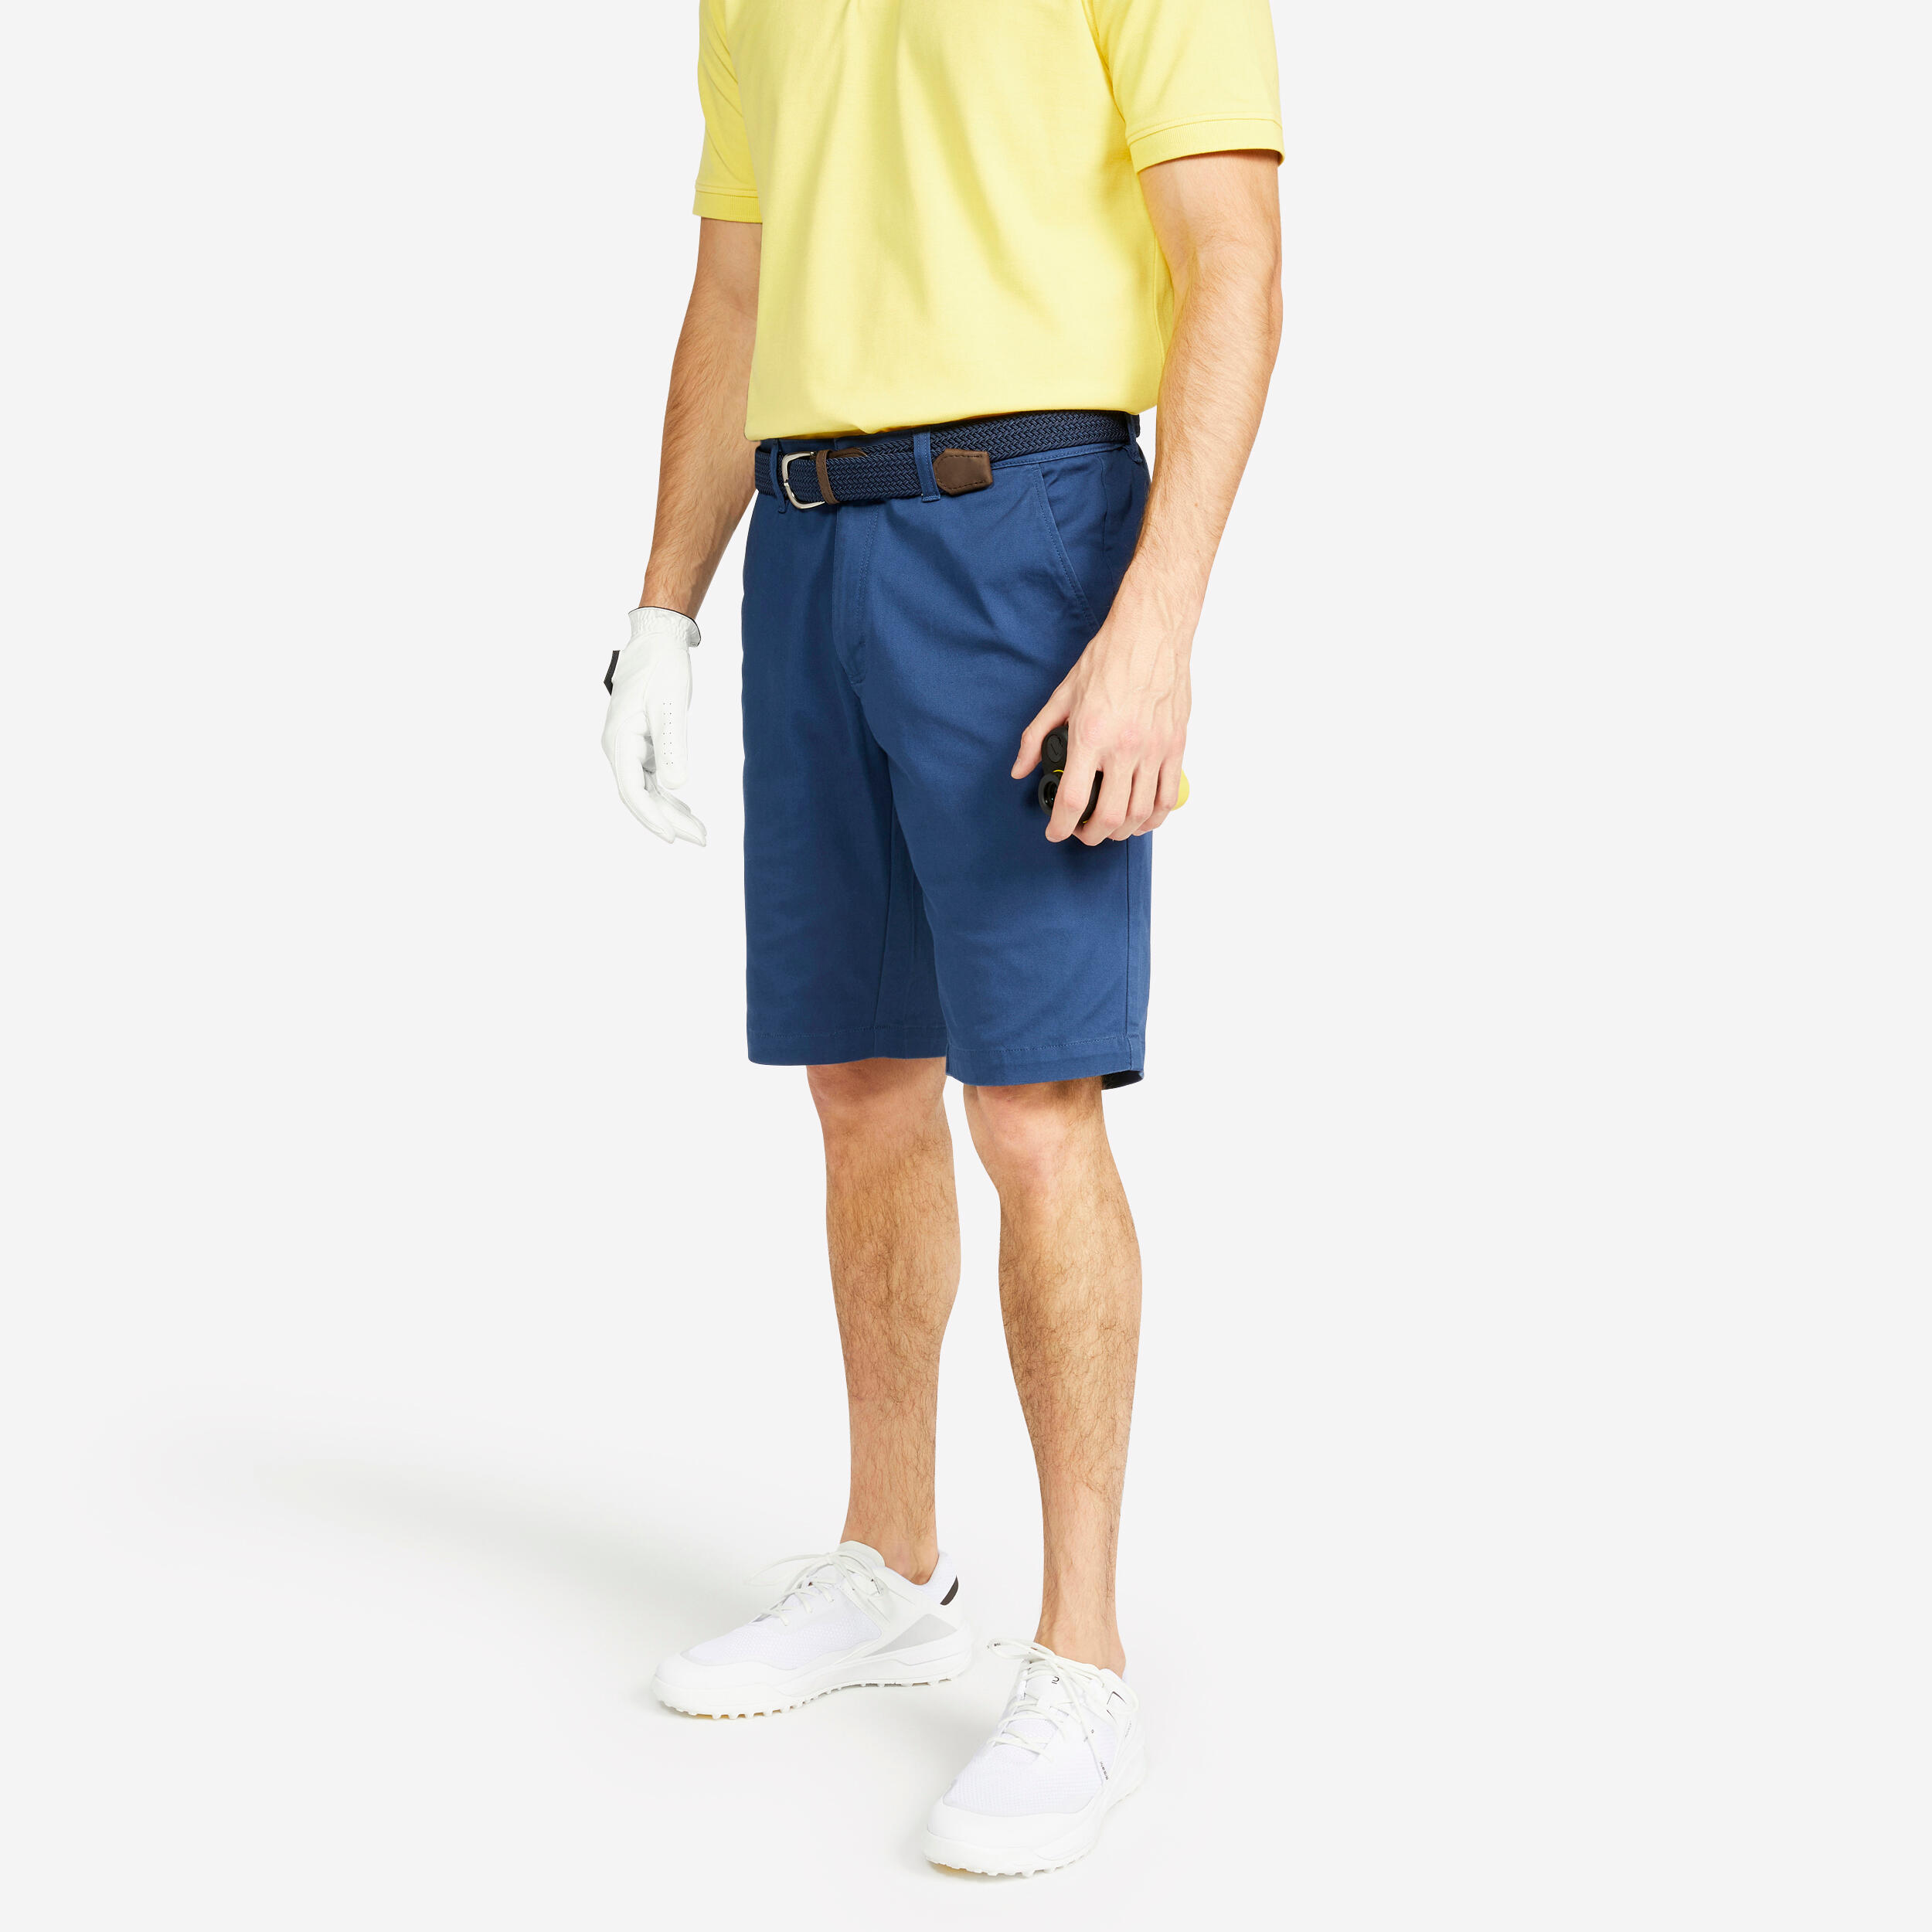 Men's Golf Chino Shorts - MW500 Dark Blue 2/6